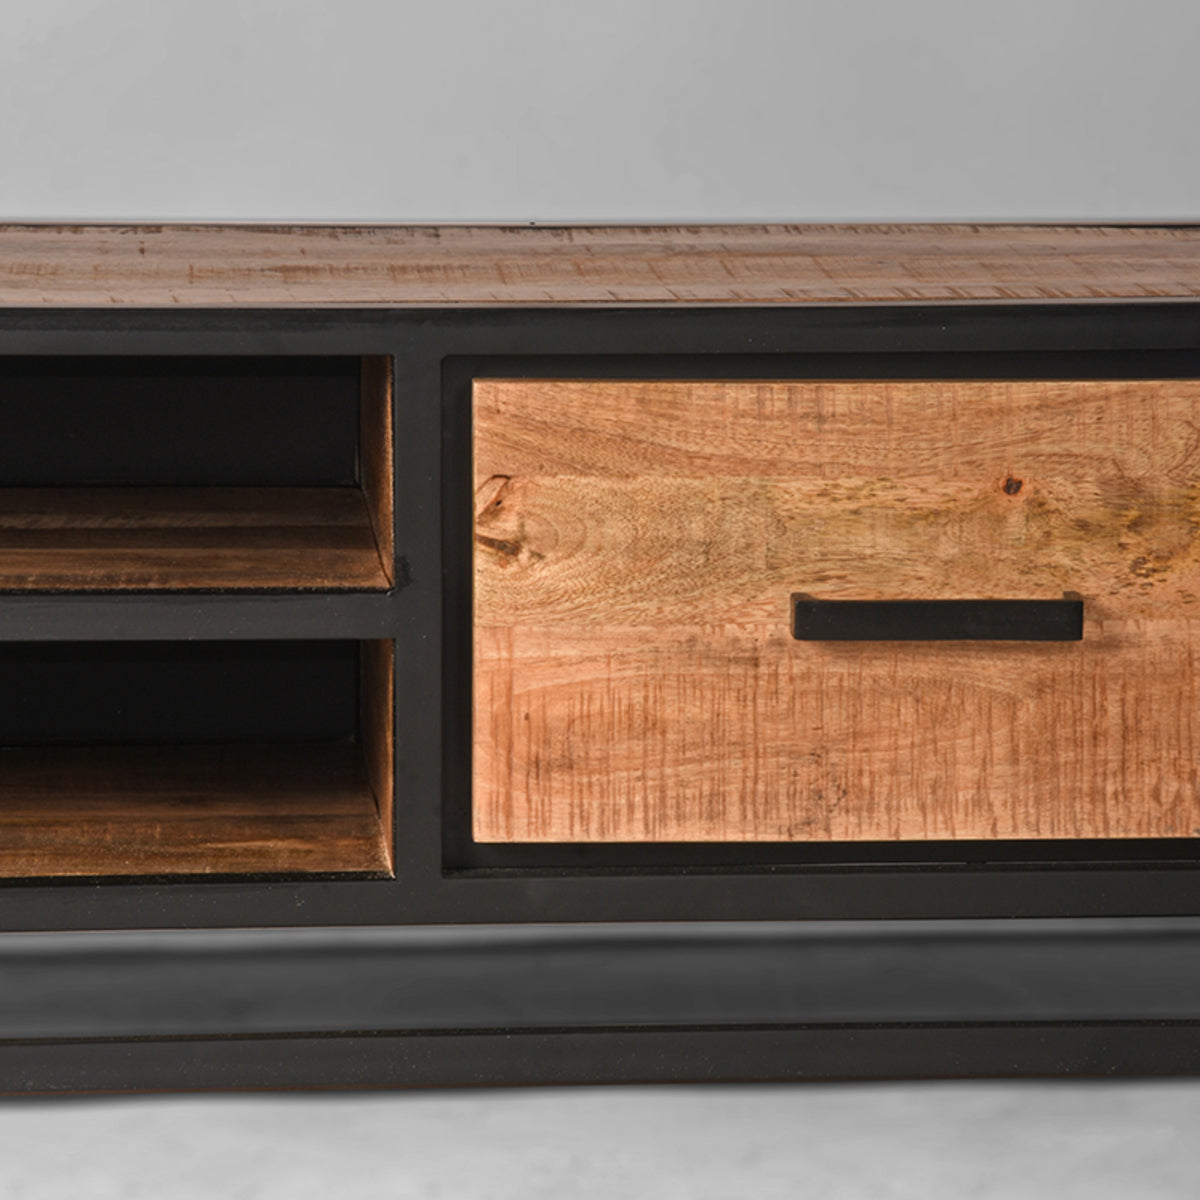 LABEL51 TV cabinet Tampa - Rough - Mango wood - 160 cm